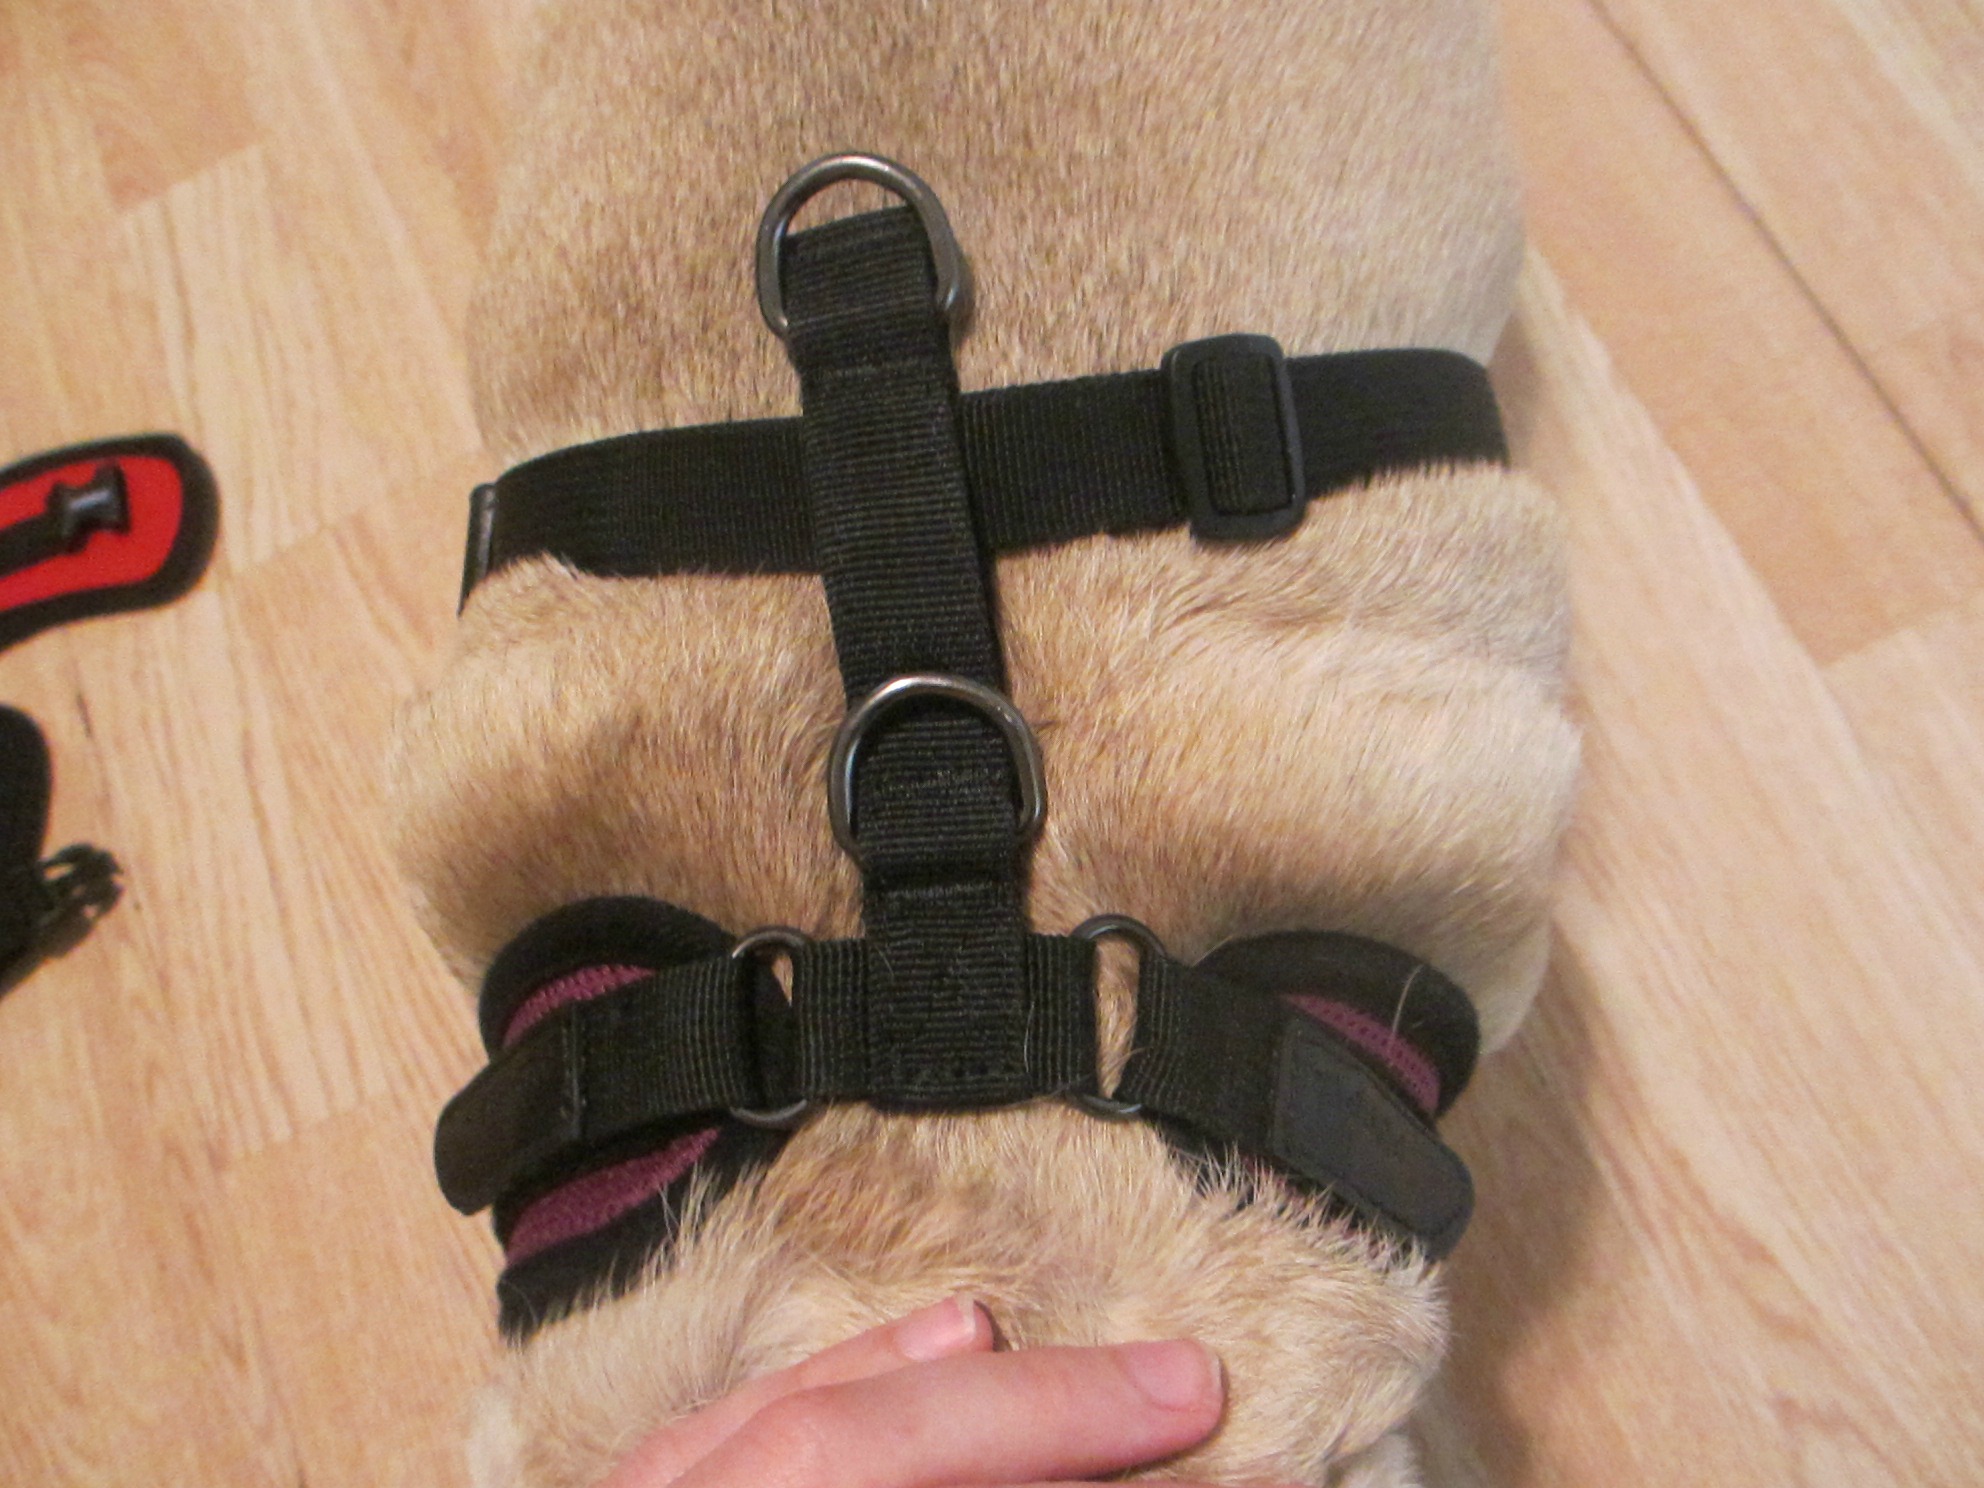 puppia adjustable harness